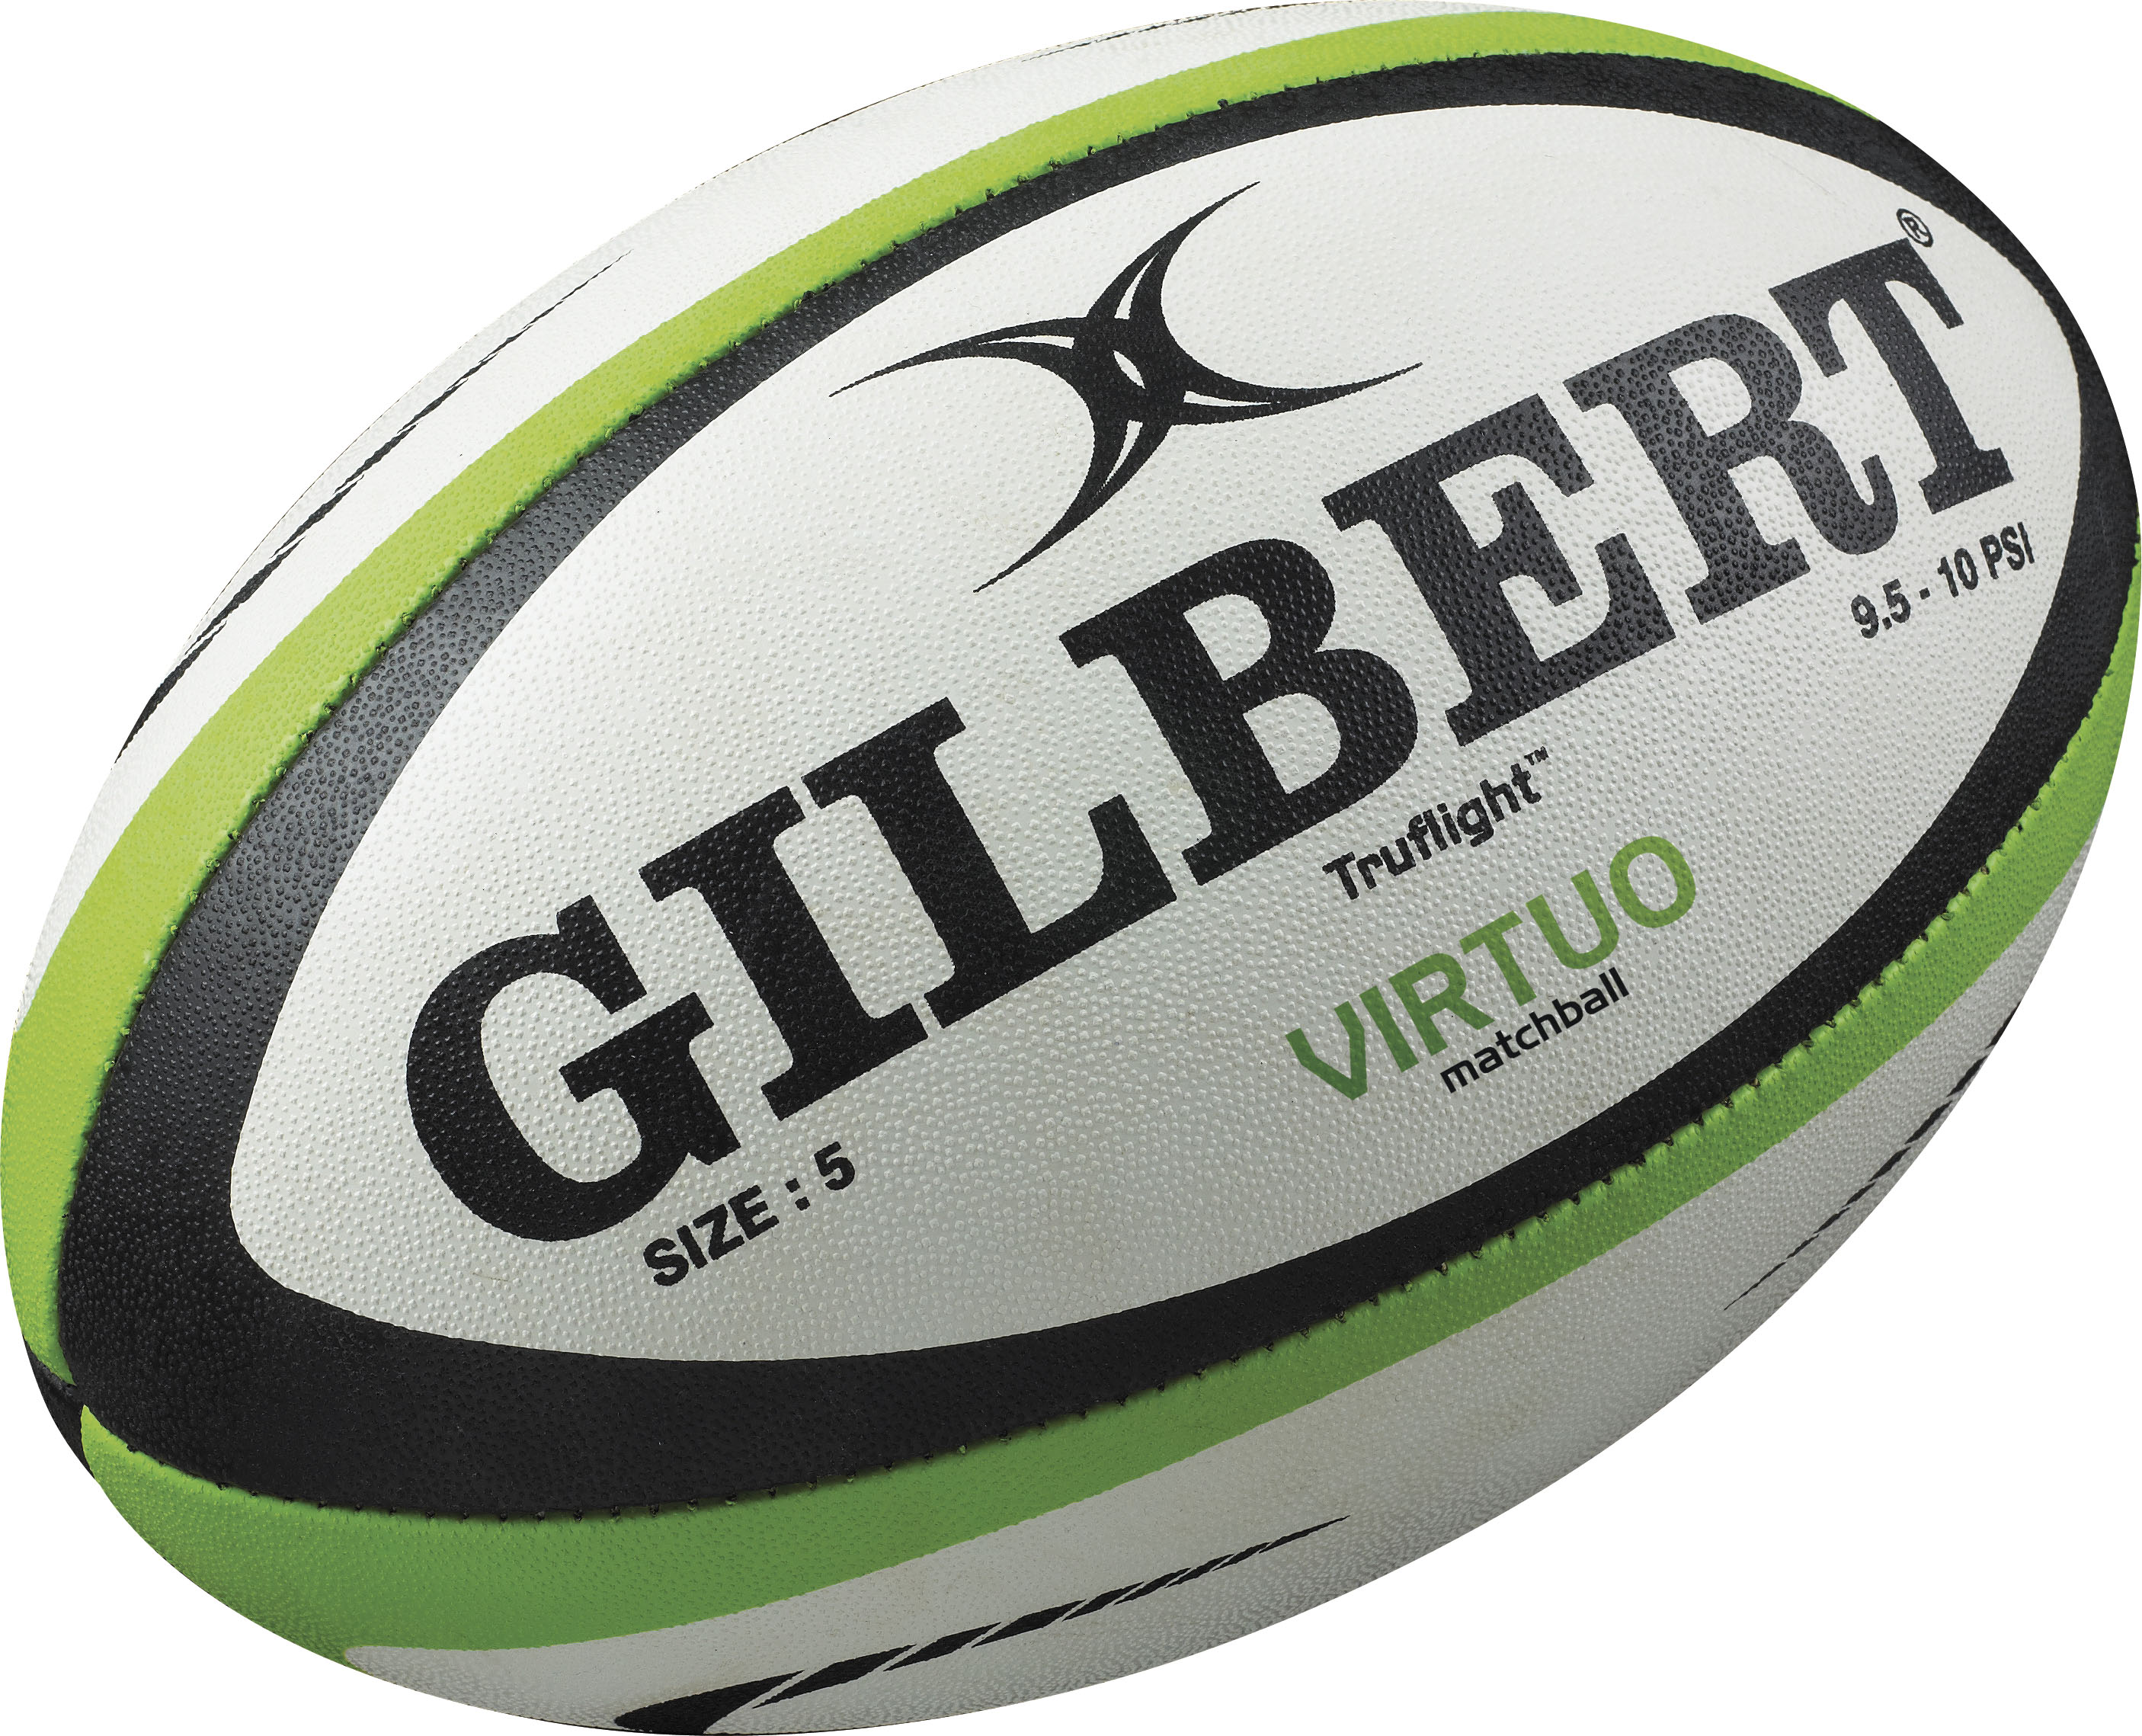 Ballon Rugby Gilbert - Virtuo Généric Noir/vert- Gladiasport